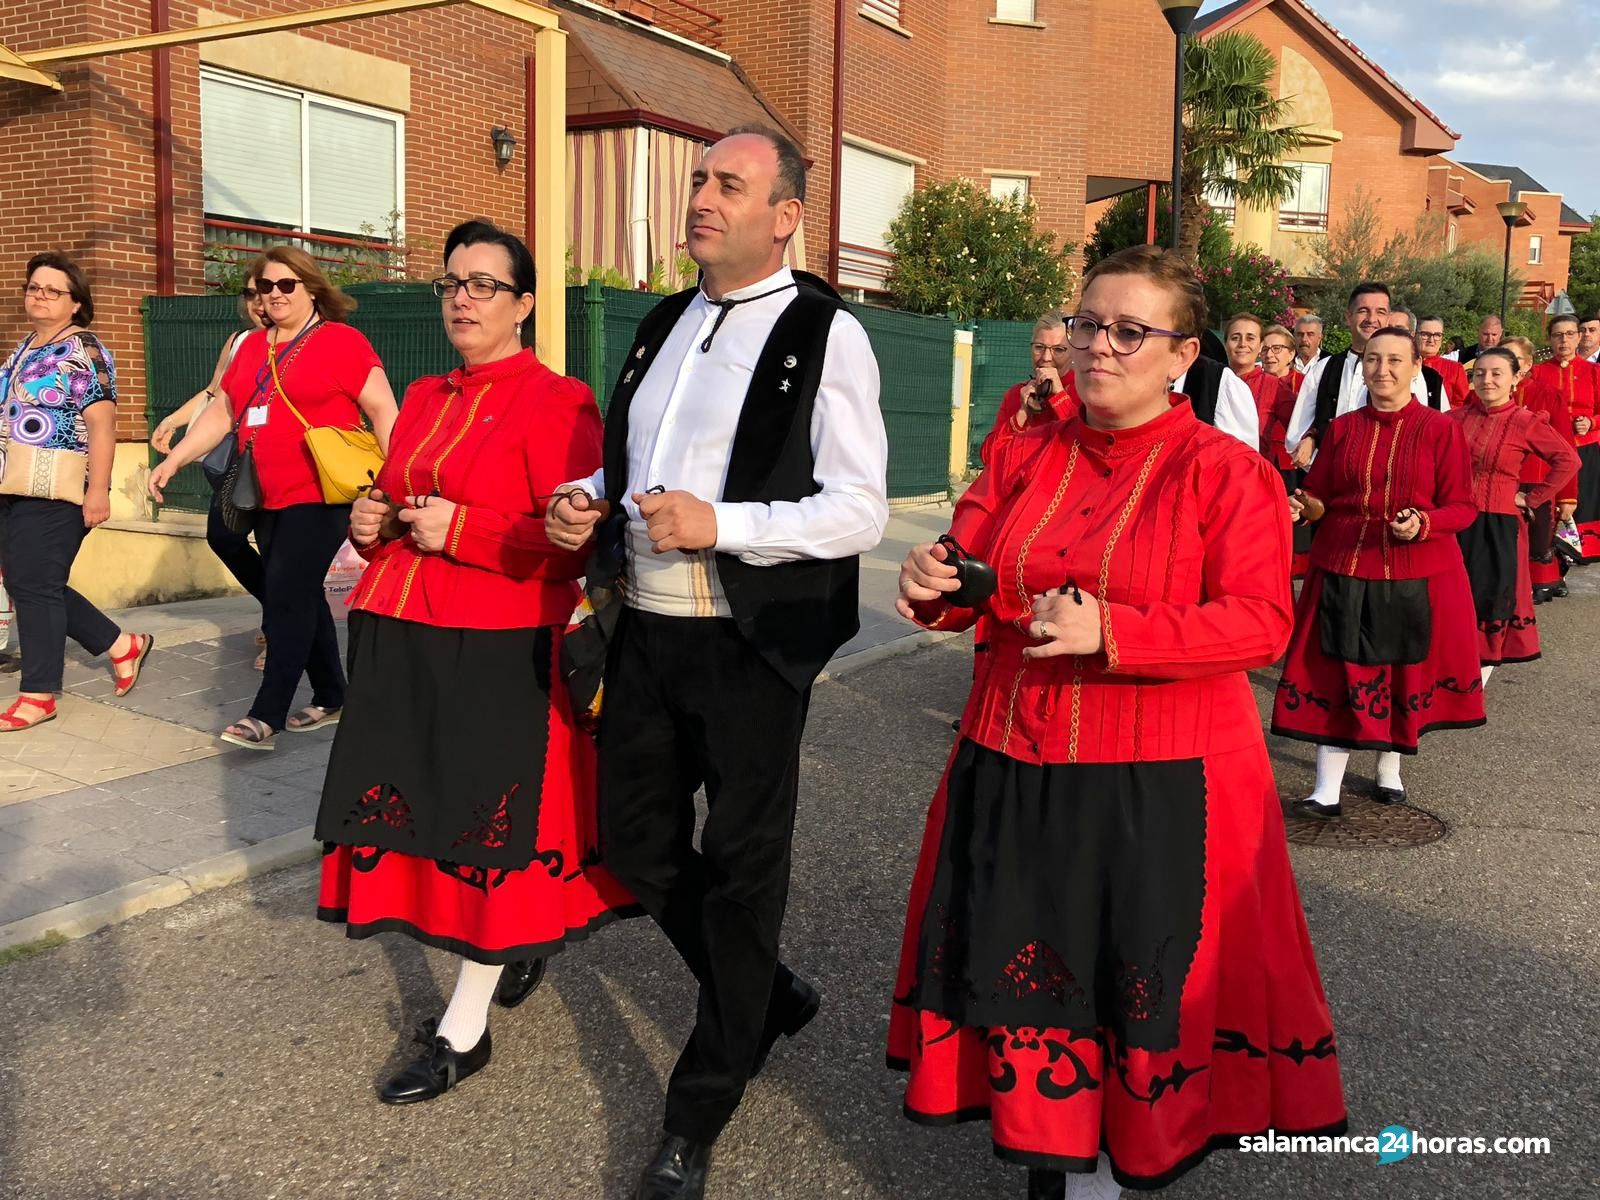  Festival Folclórico Villamayor 2019 (17) 